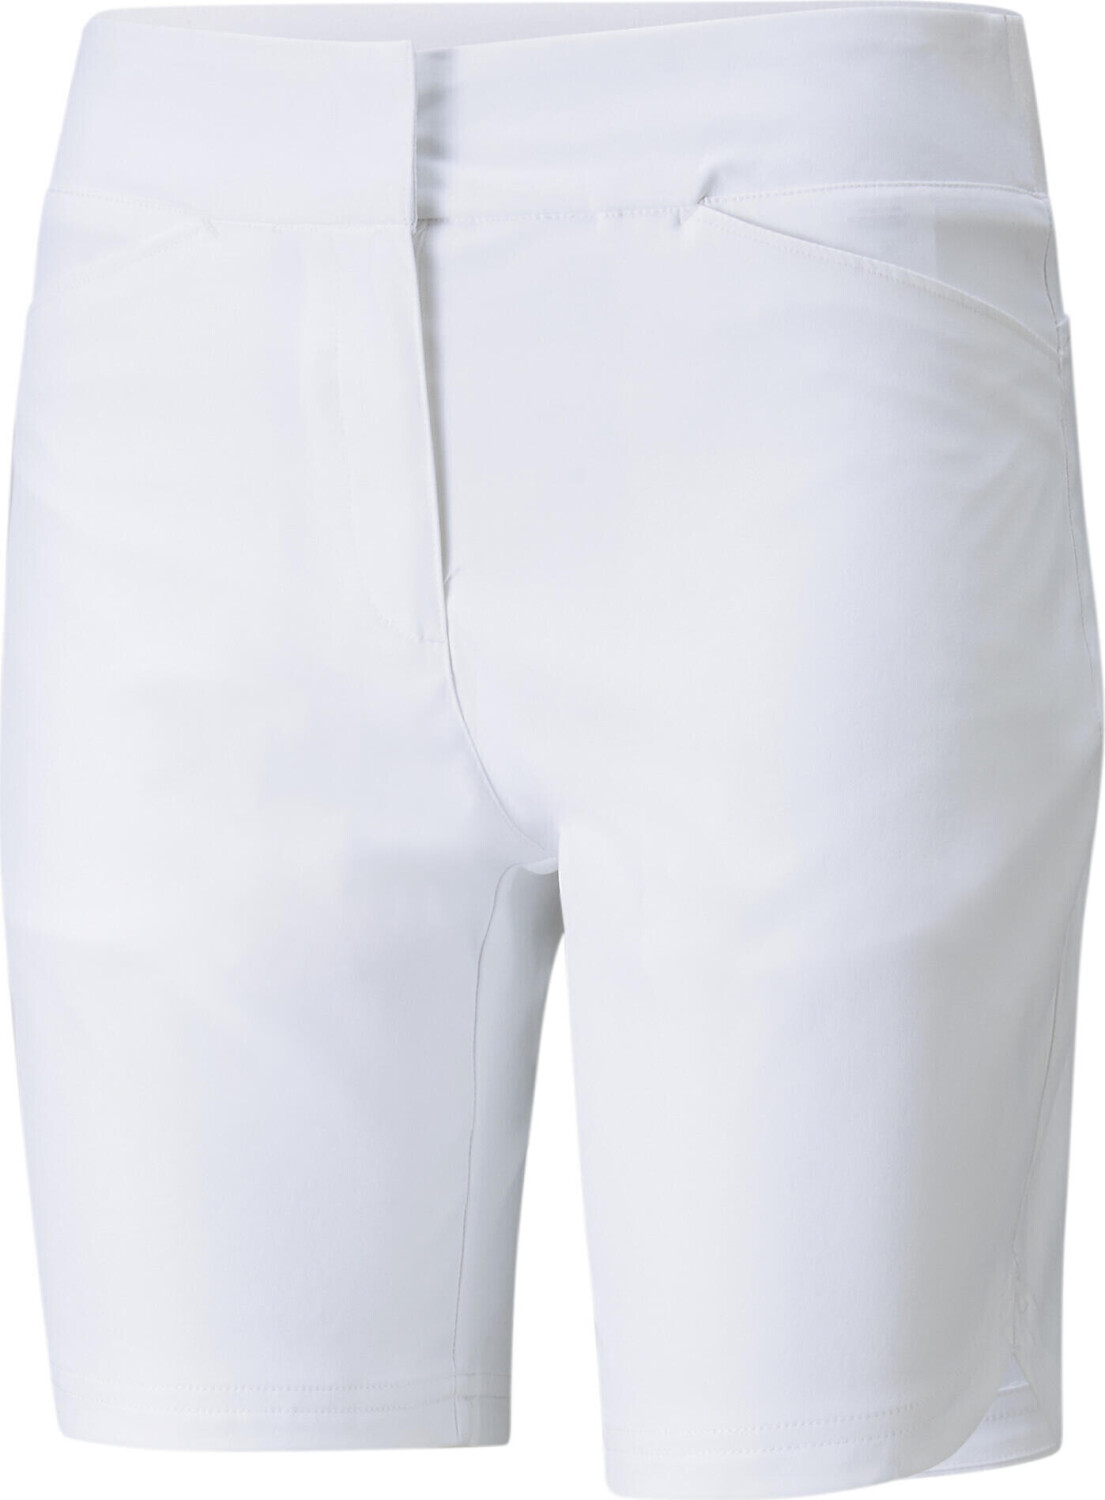 Photos - Football Kit Puma W Bermuda Short bright white 